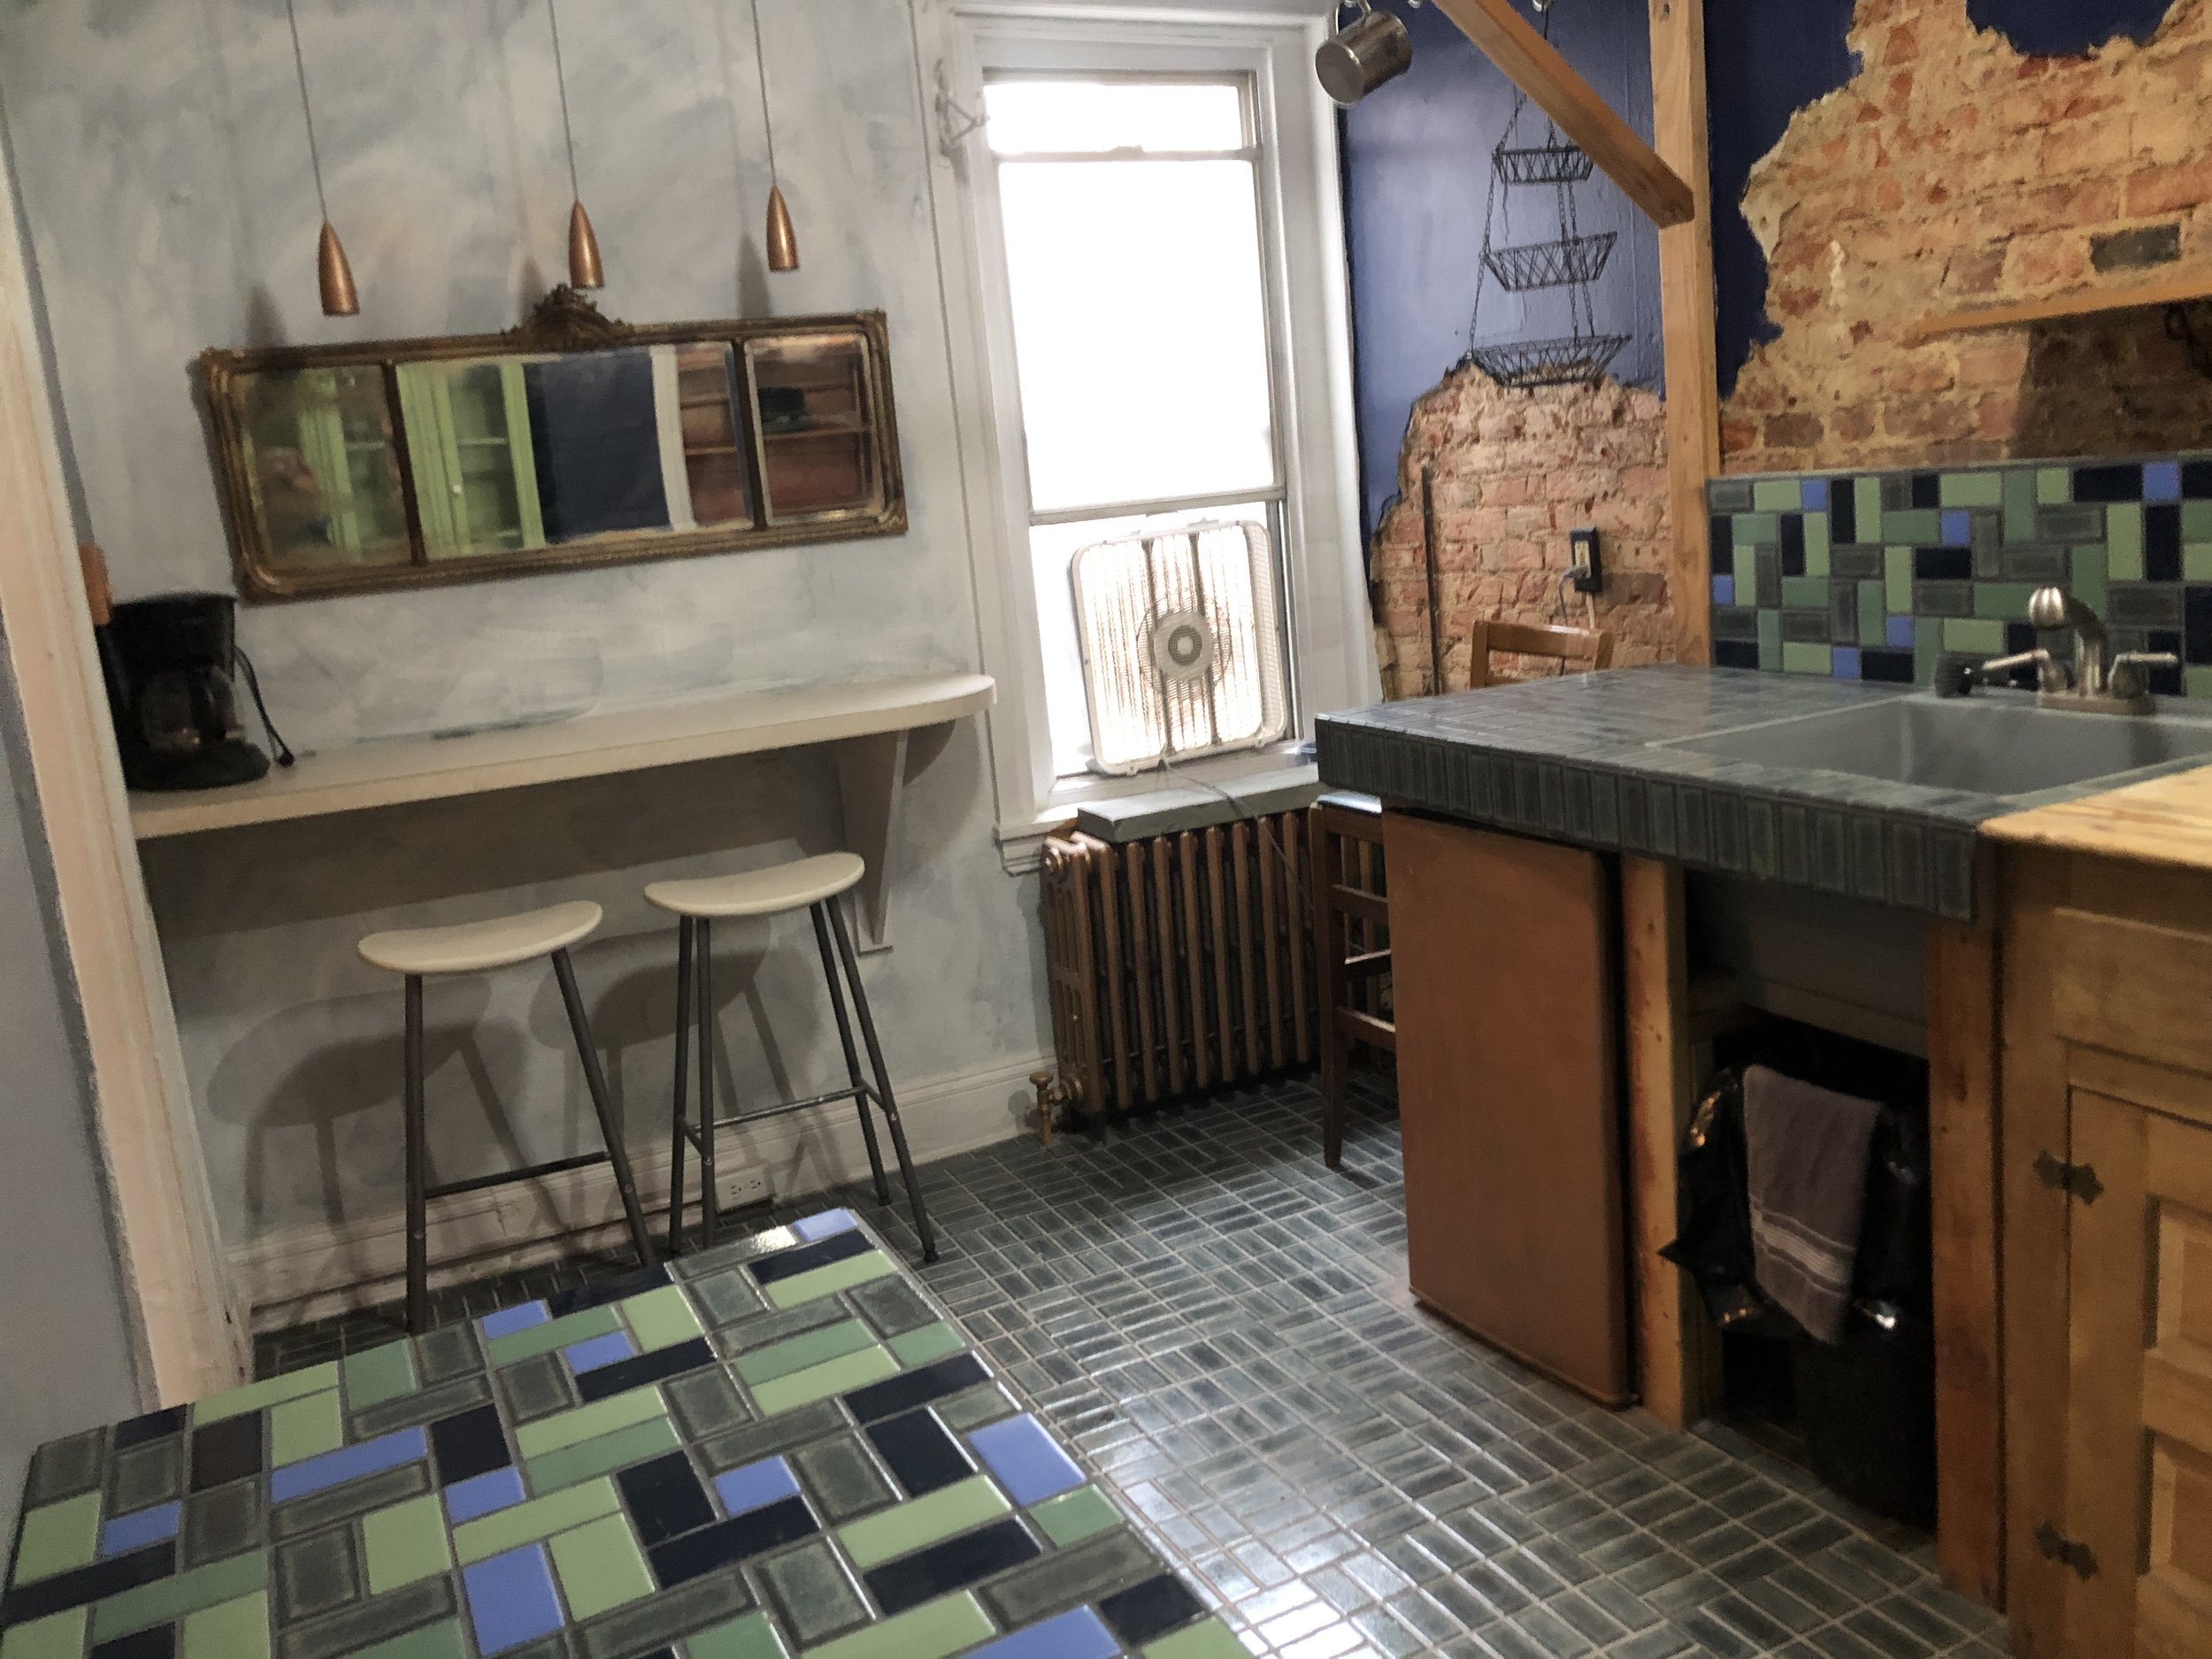 Metzner Mosaics: Inspiring Kitchen, Contemporary Color, Matching Backsplash